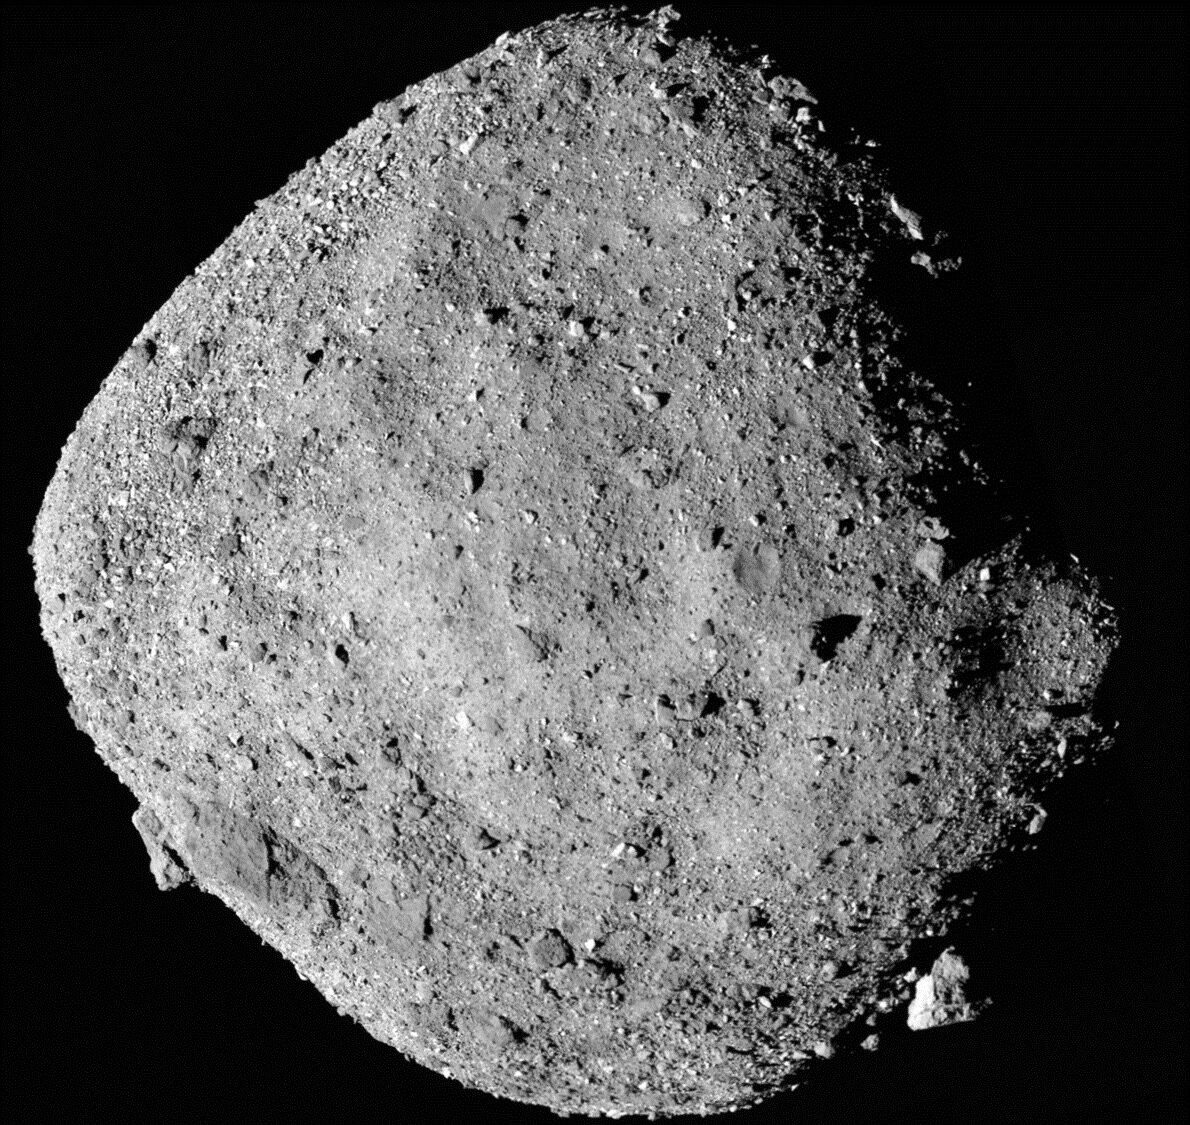    Астероид БеннуNASA / Goddard / University of Arizona